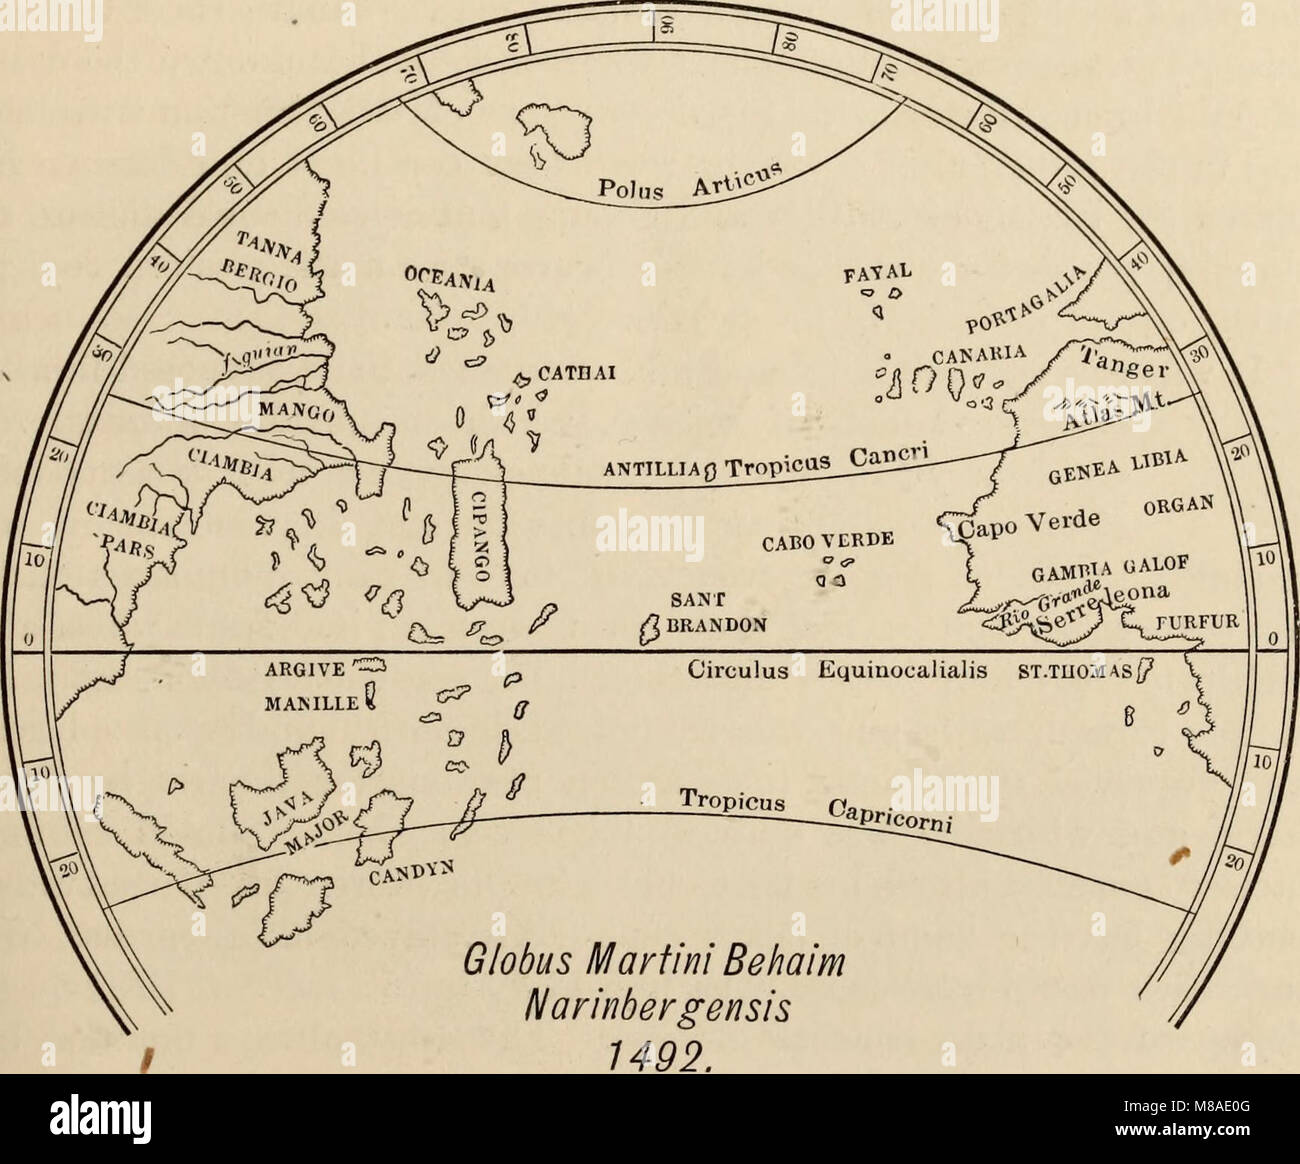 Globus Martini Behaim Narinbergensis 1492. (Globus von Martin Behaim  Stockfotografie - Alamy